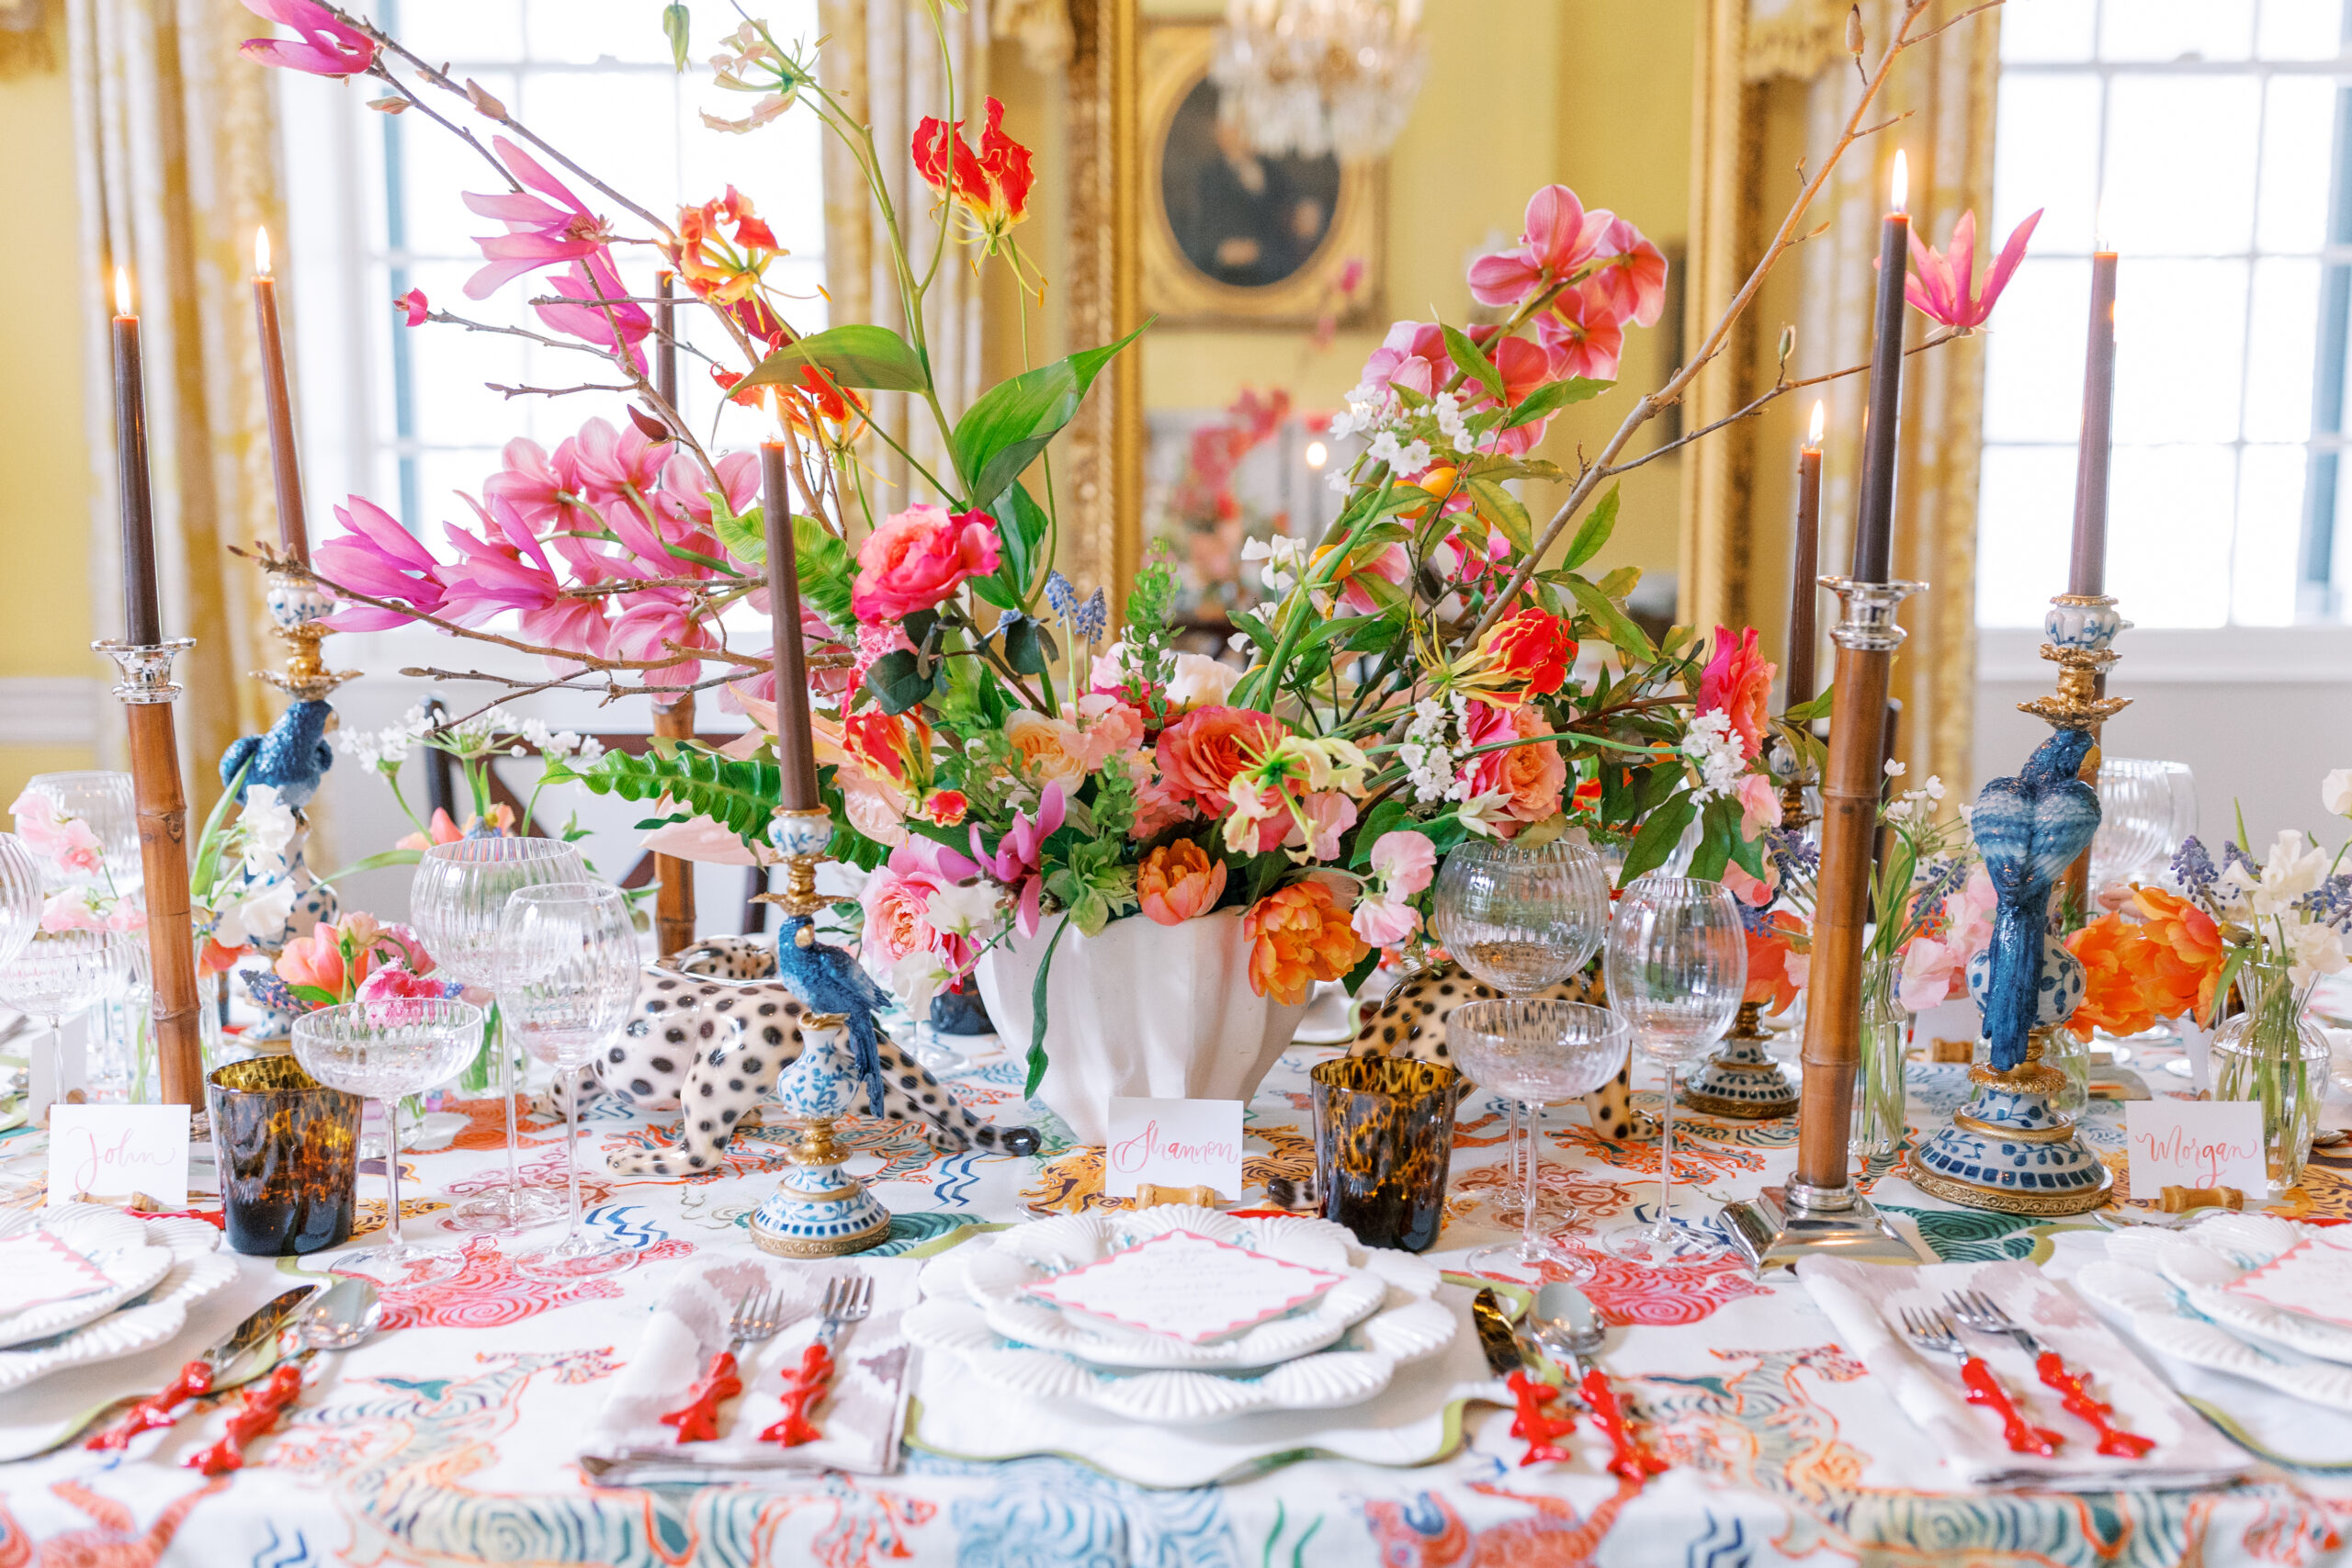 Lowdnes Grove Wedding by destination film wedding photographer Katie Trauffer Photography - jungle inspired reception table design